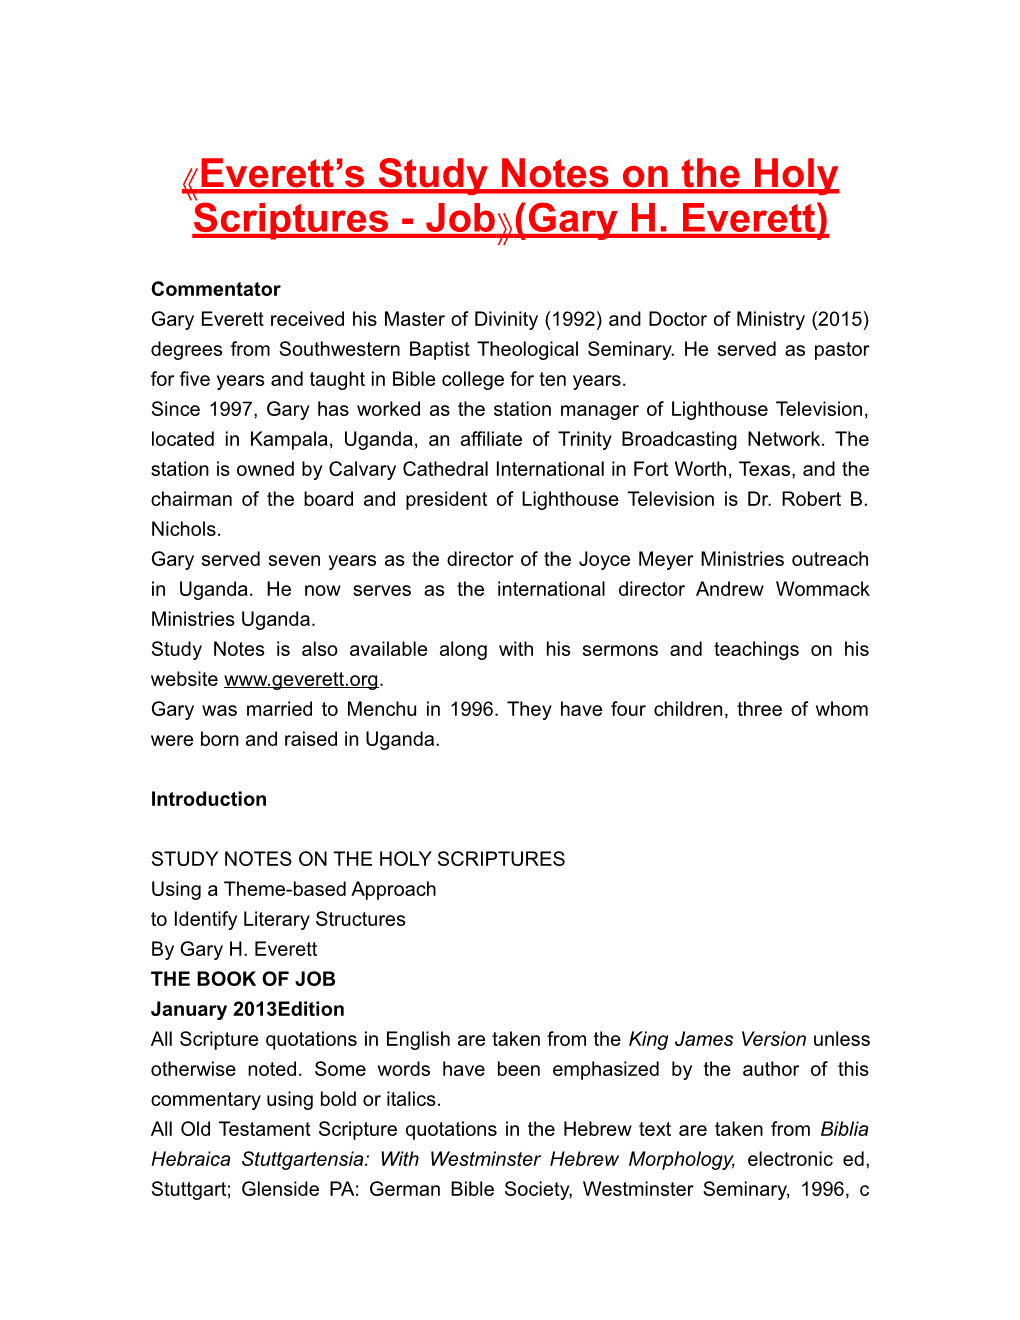 Everett S Study Notes on the Holy Scriptures - Job (Gary H. Everett)